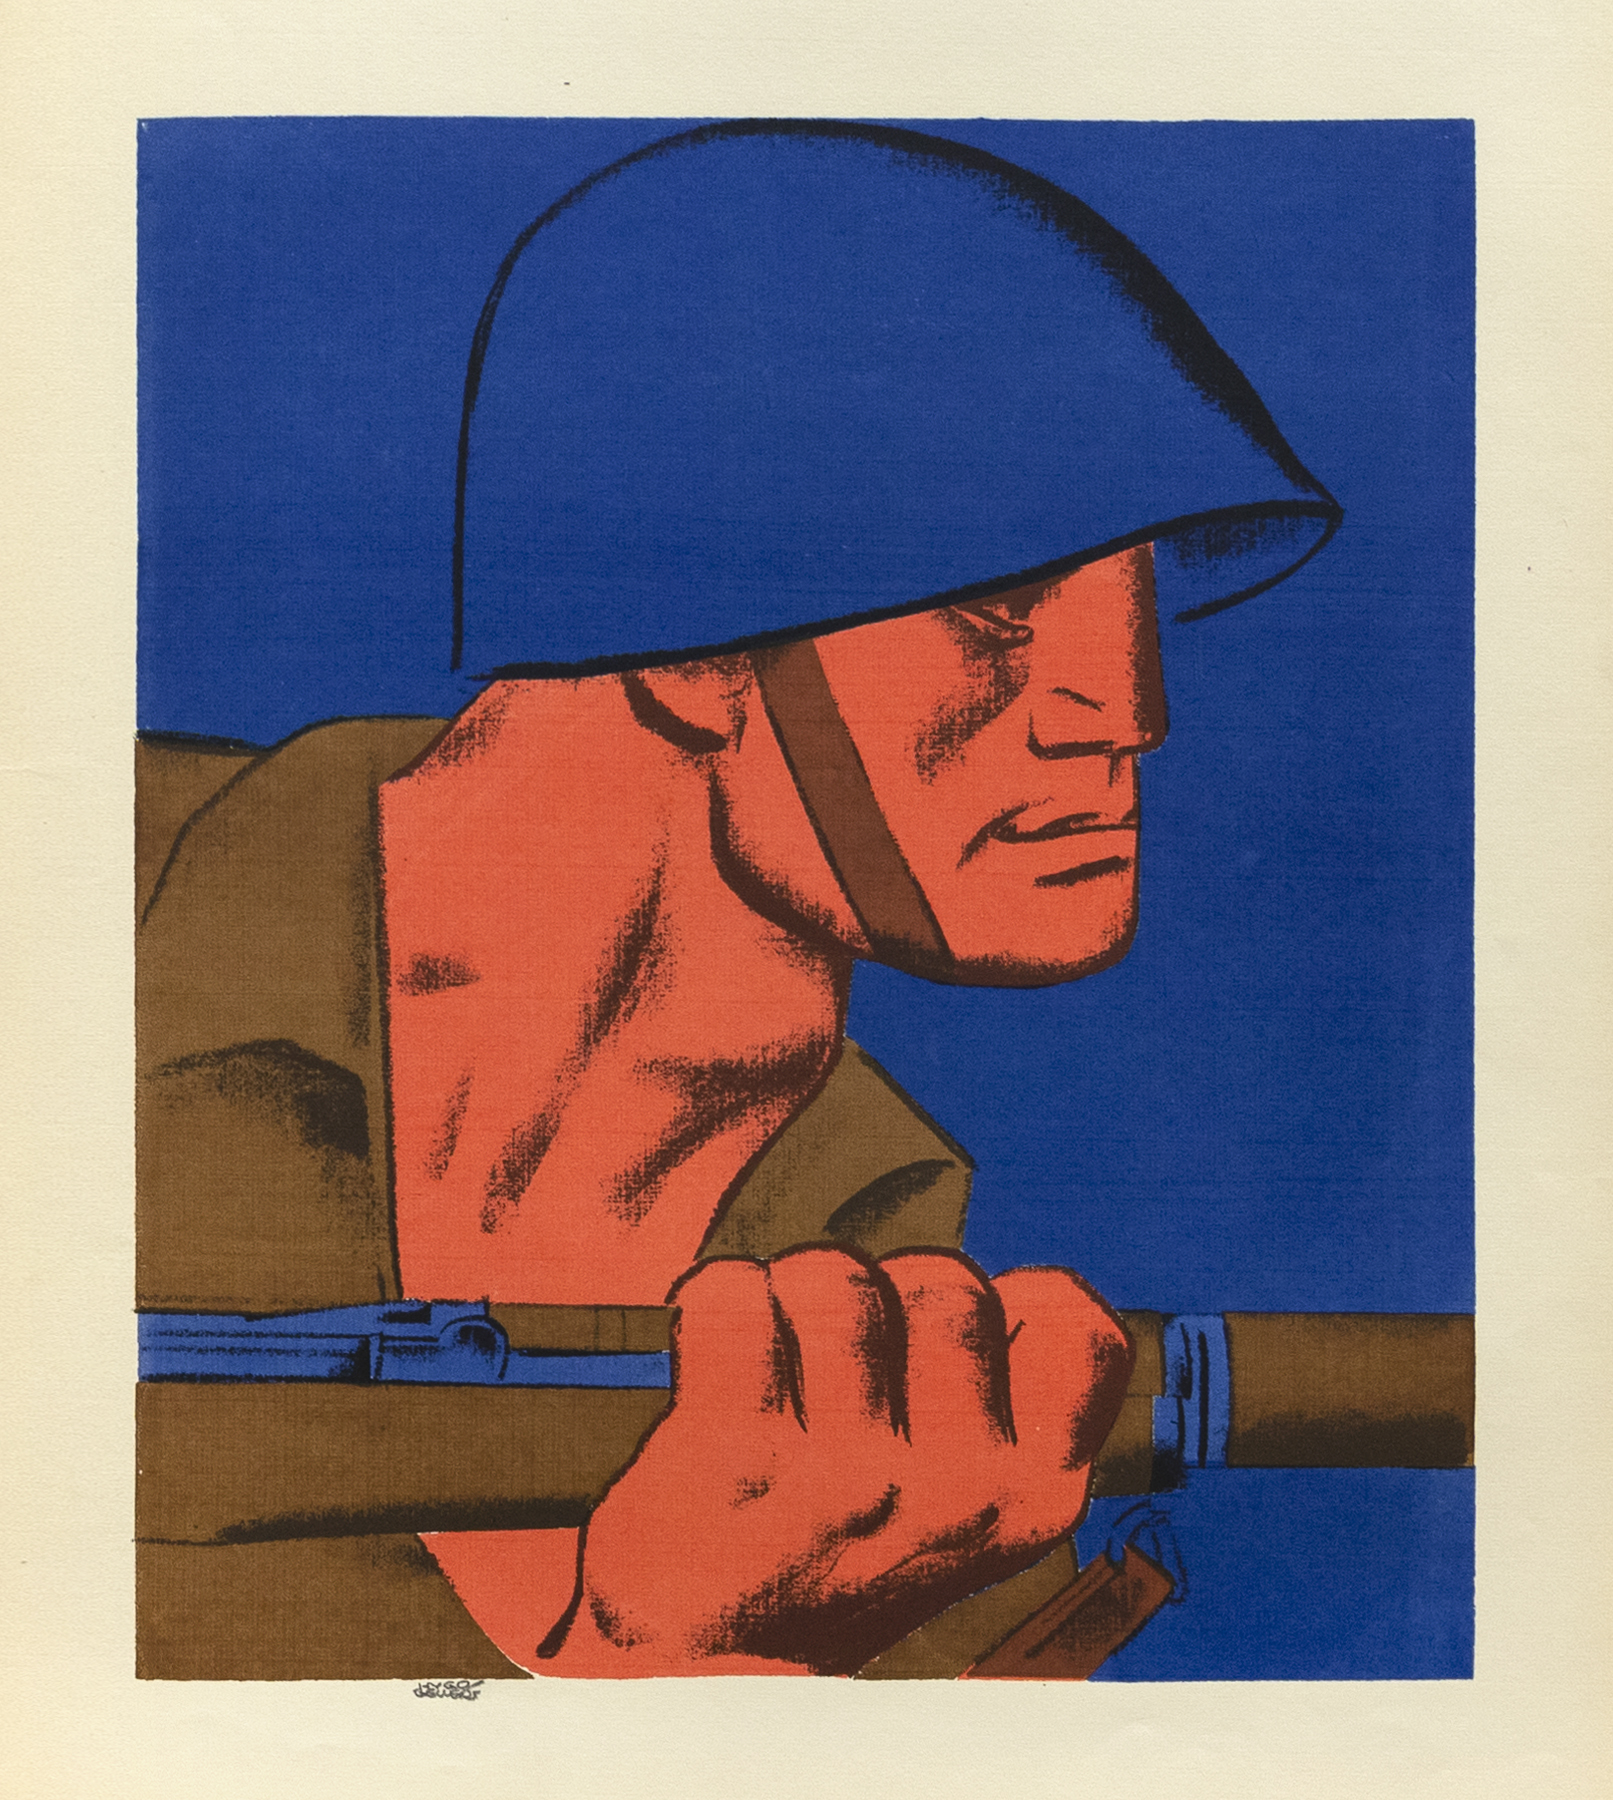 Free Man's Duties 3, 1943, Silkscreen, 15 x 13 1/8 inches (38.1 x 33.3 cm), Edition of 54